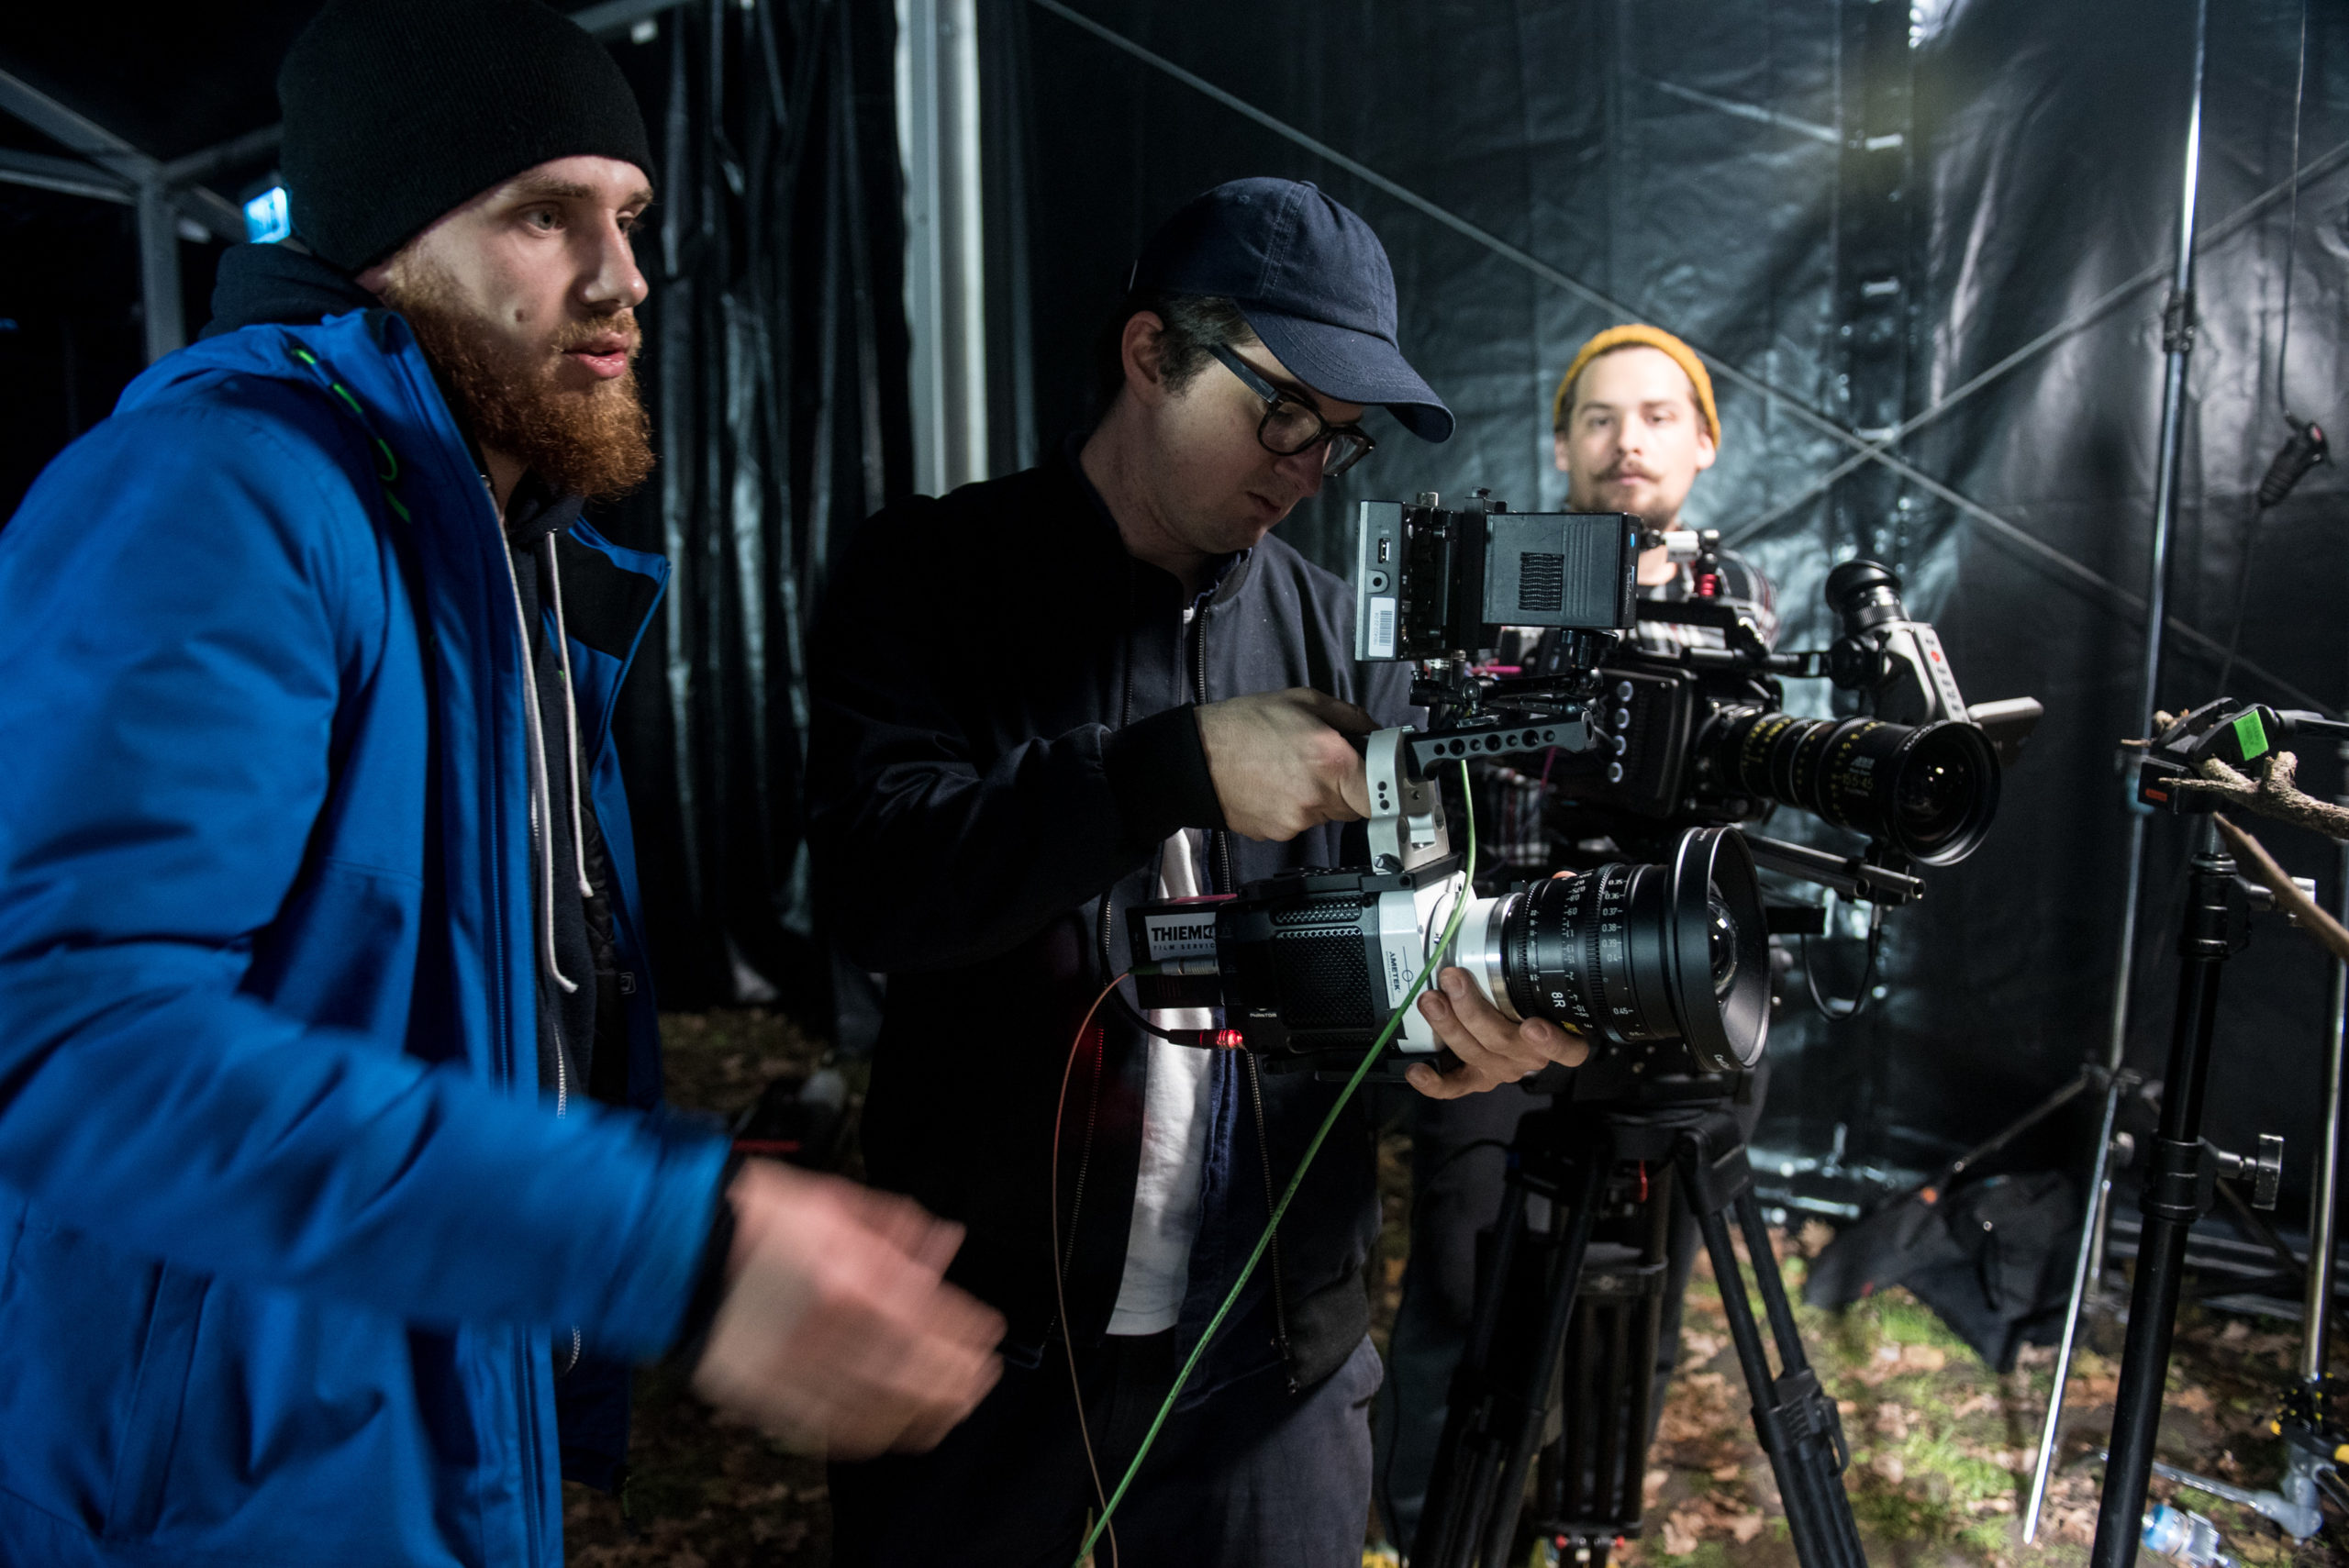 Filming set in a Cinebus tent at Film Spring Workshop. Photo: Filip Błażejowski